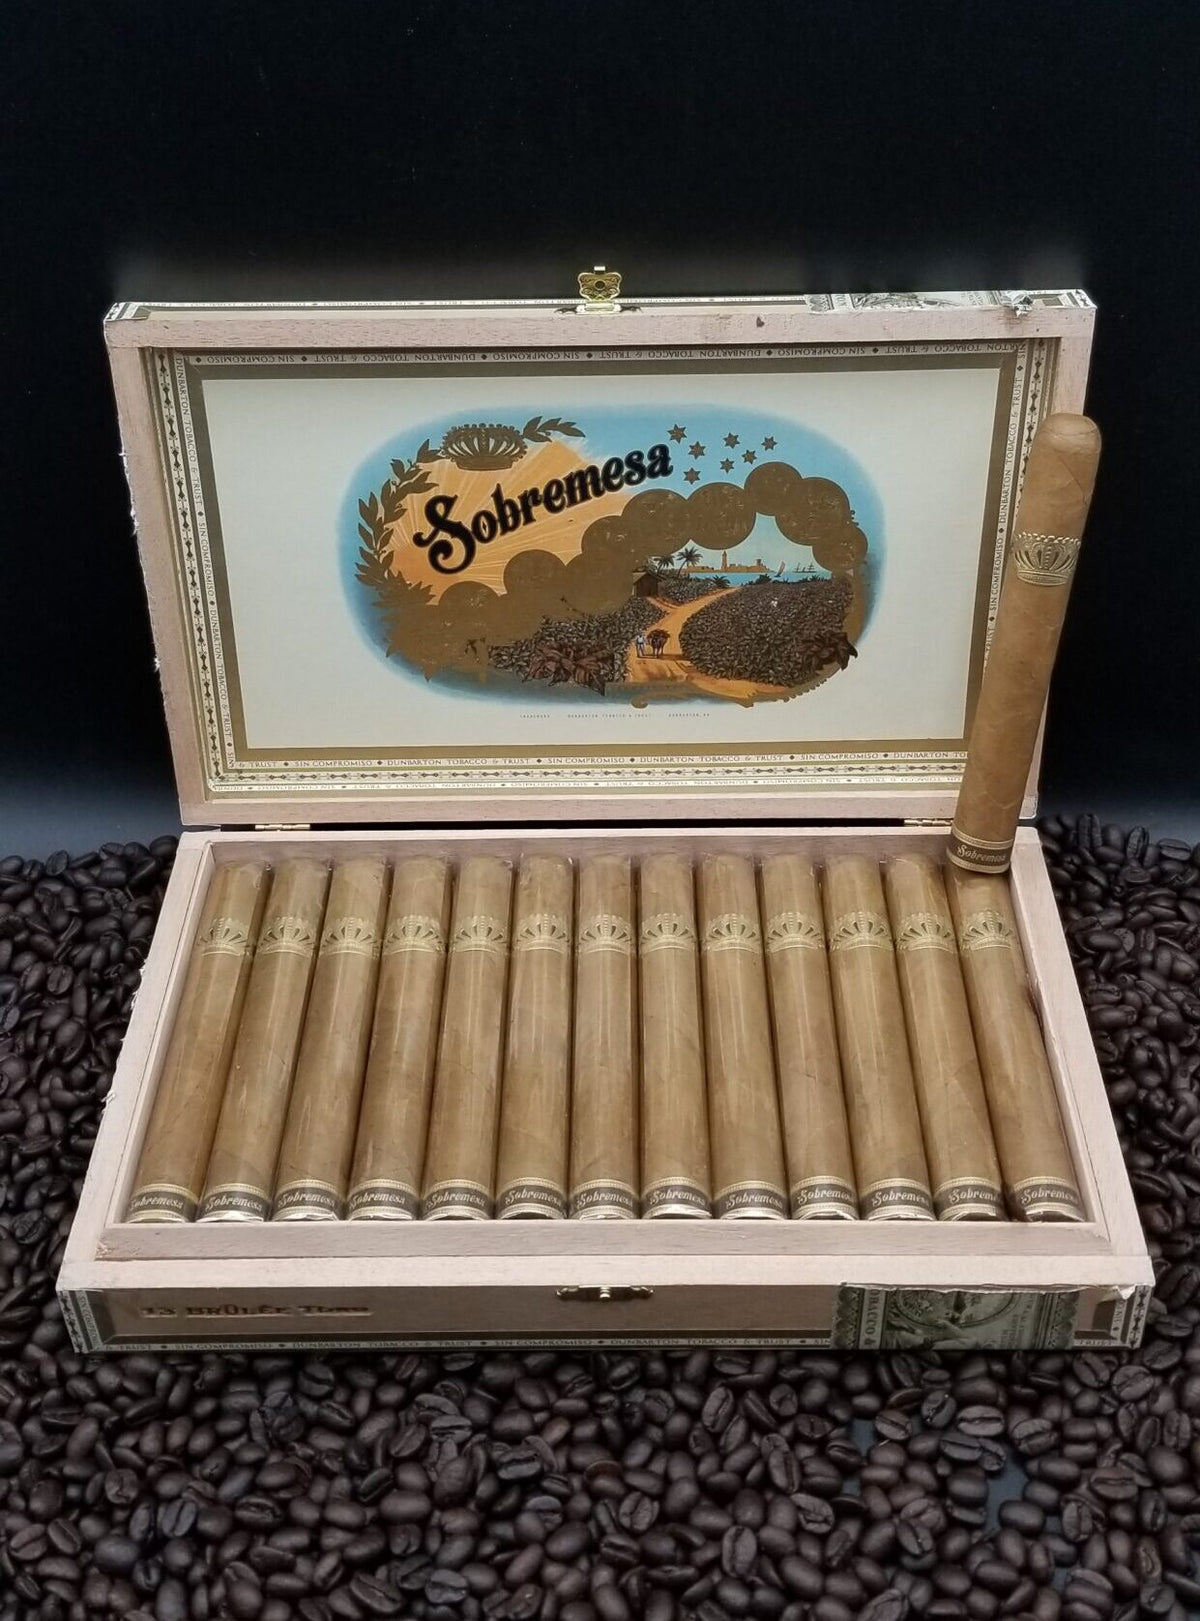 Dunbarton Sobremesa Brulee Toro cigars supplied by Sir Louis Cigars